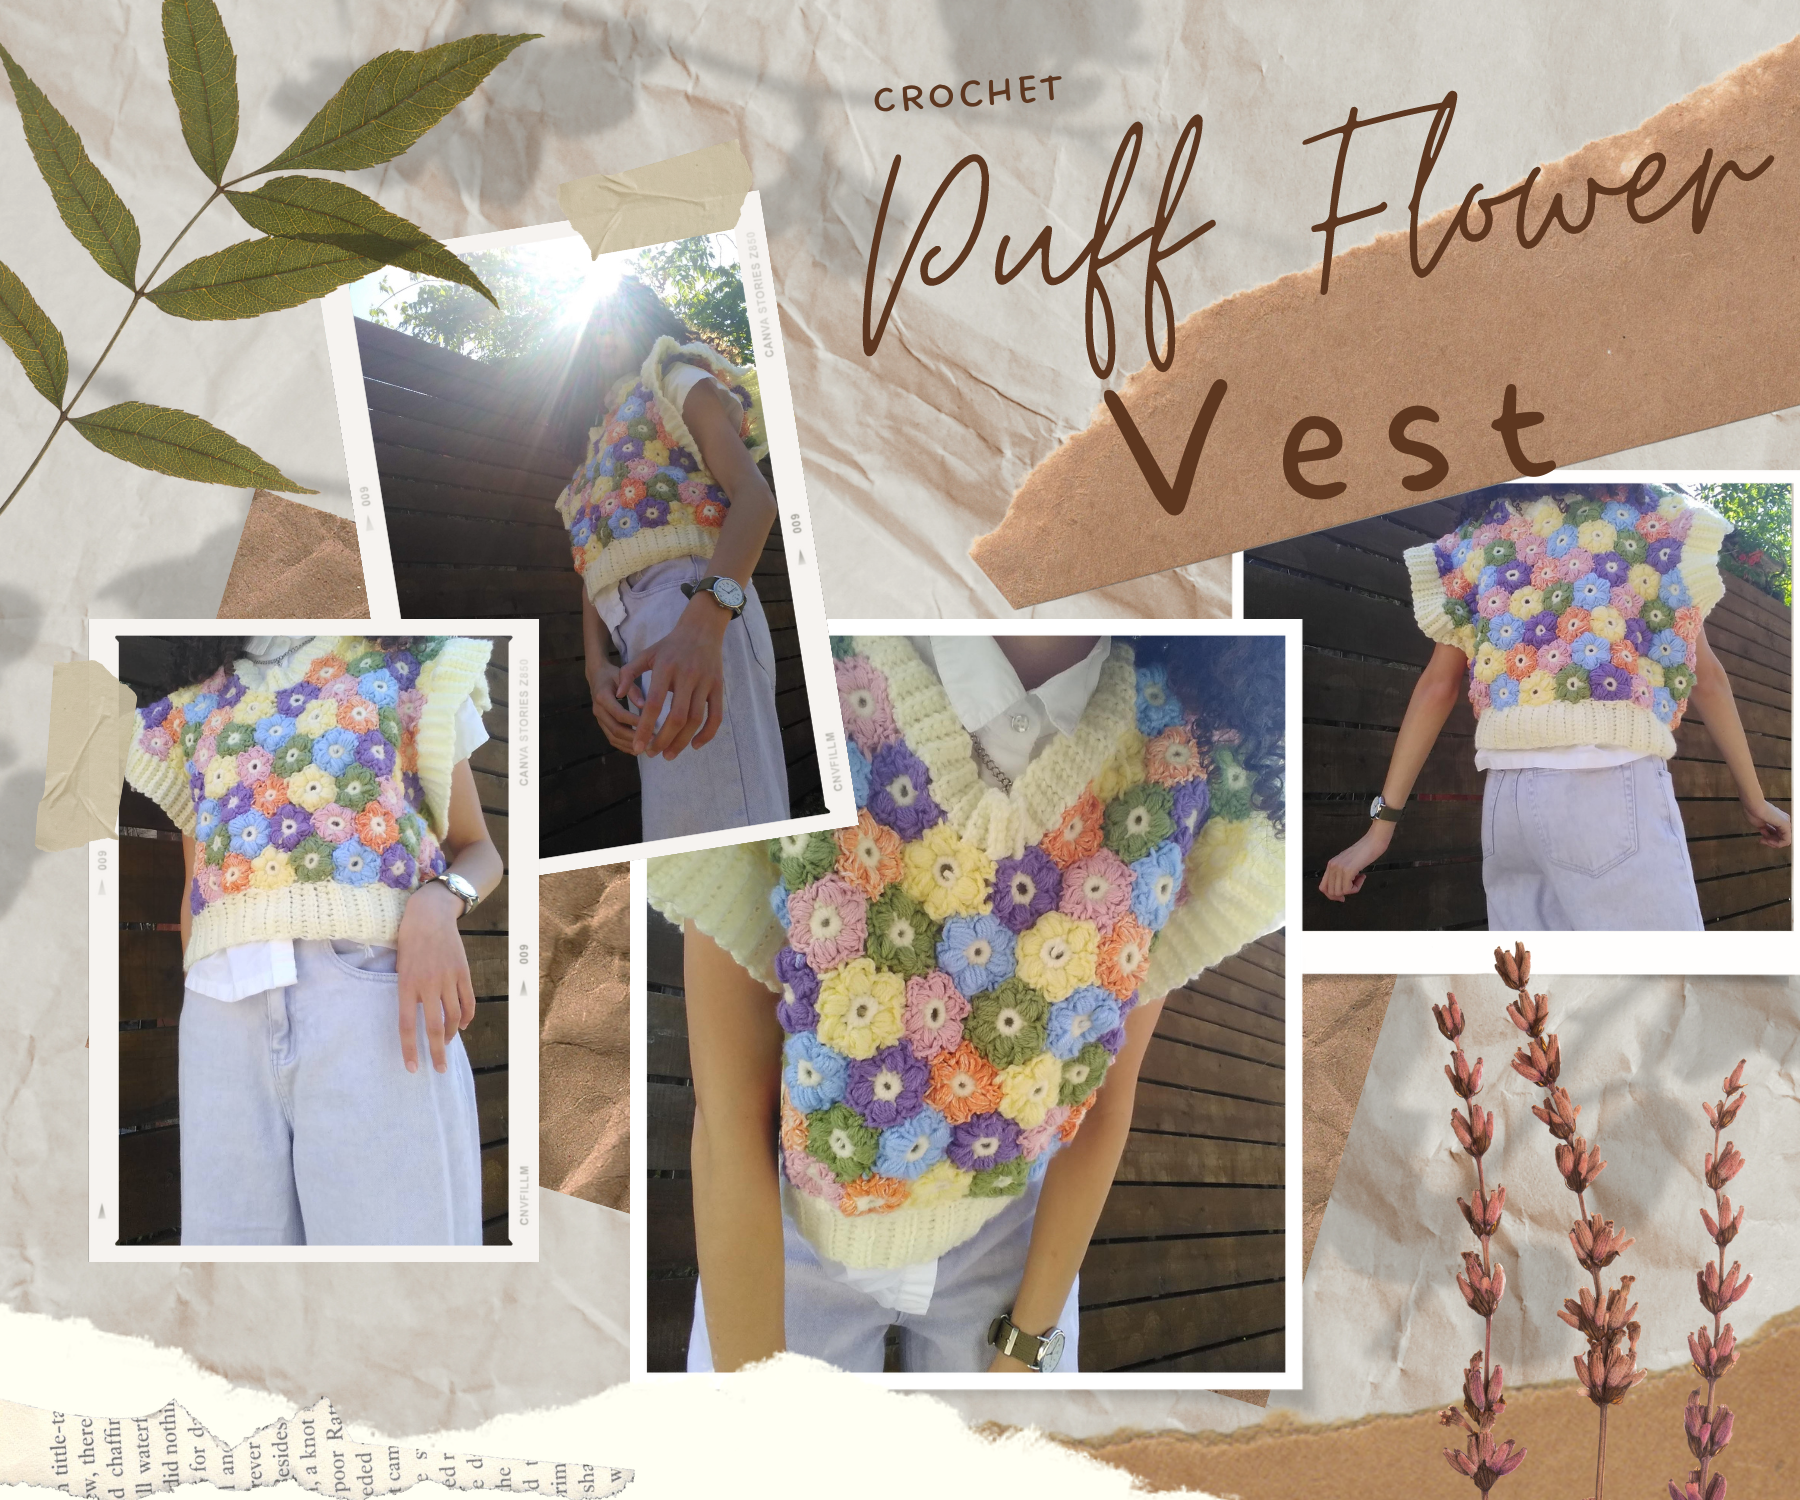 🌸 Crochet Puff-Flower Vest 🌸